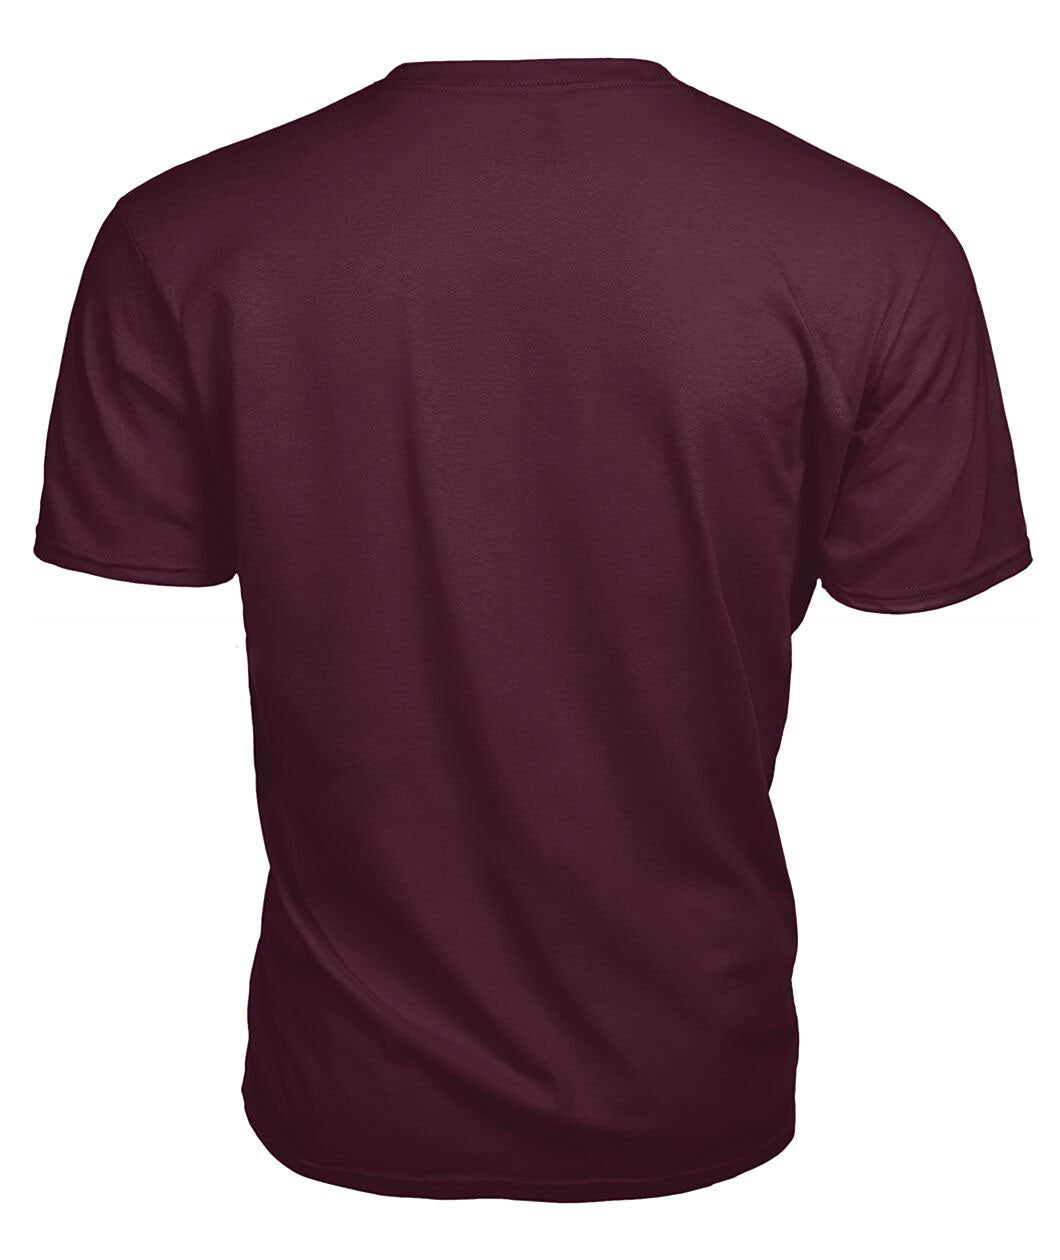 Maxwell Hunting Tartan Crest 2D T-shirt - Blood Runs Through My Veins Style